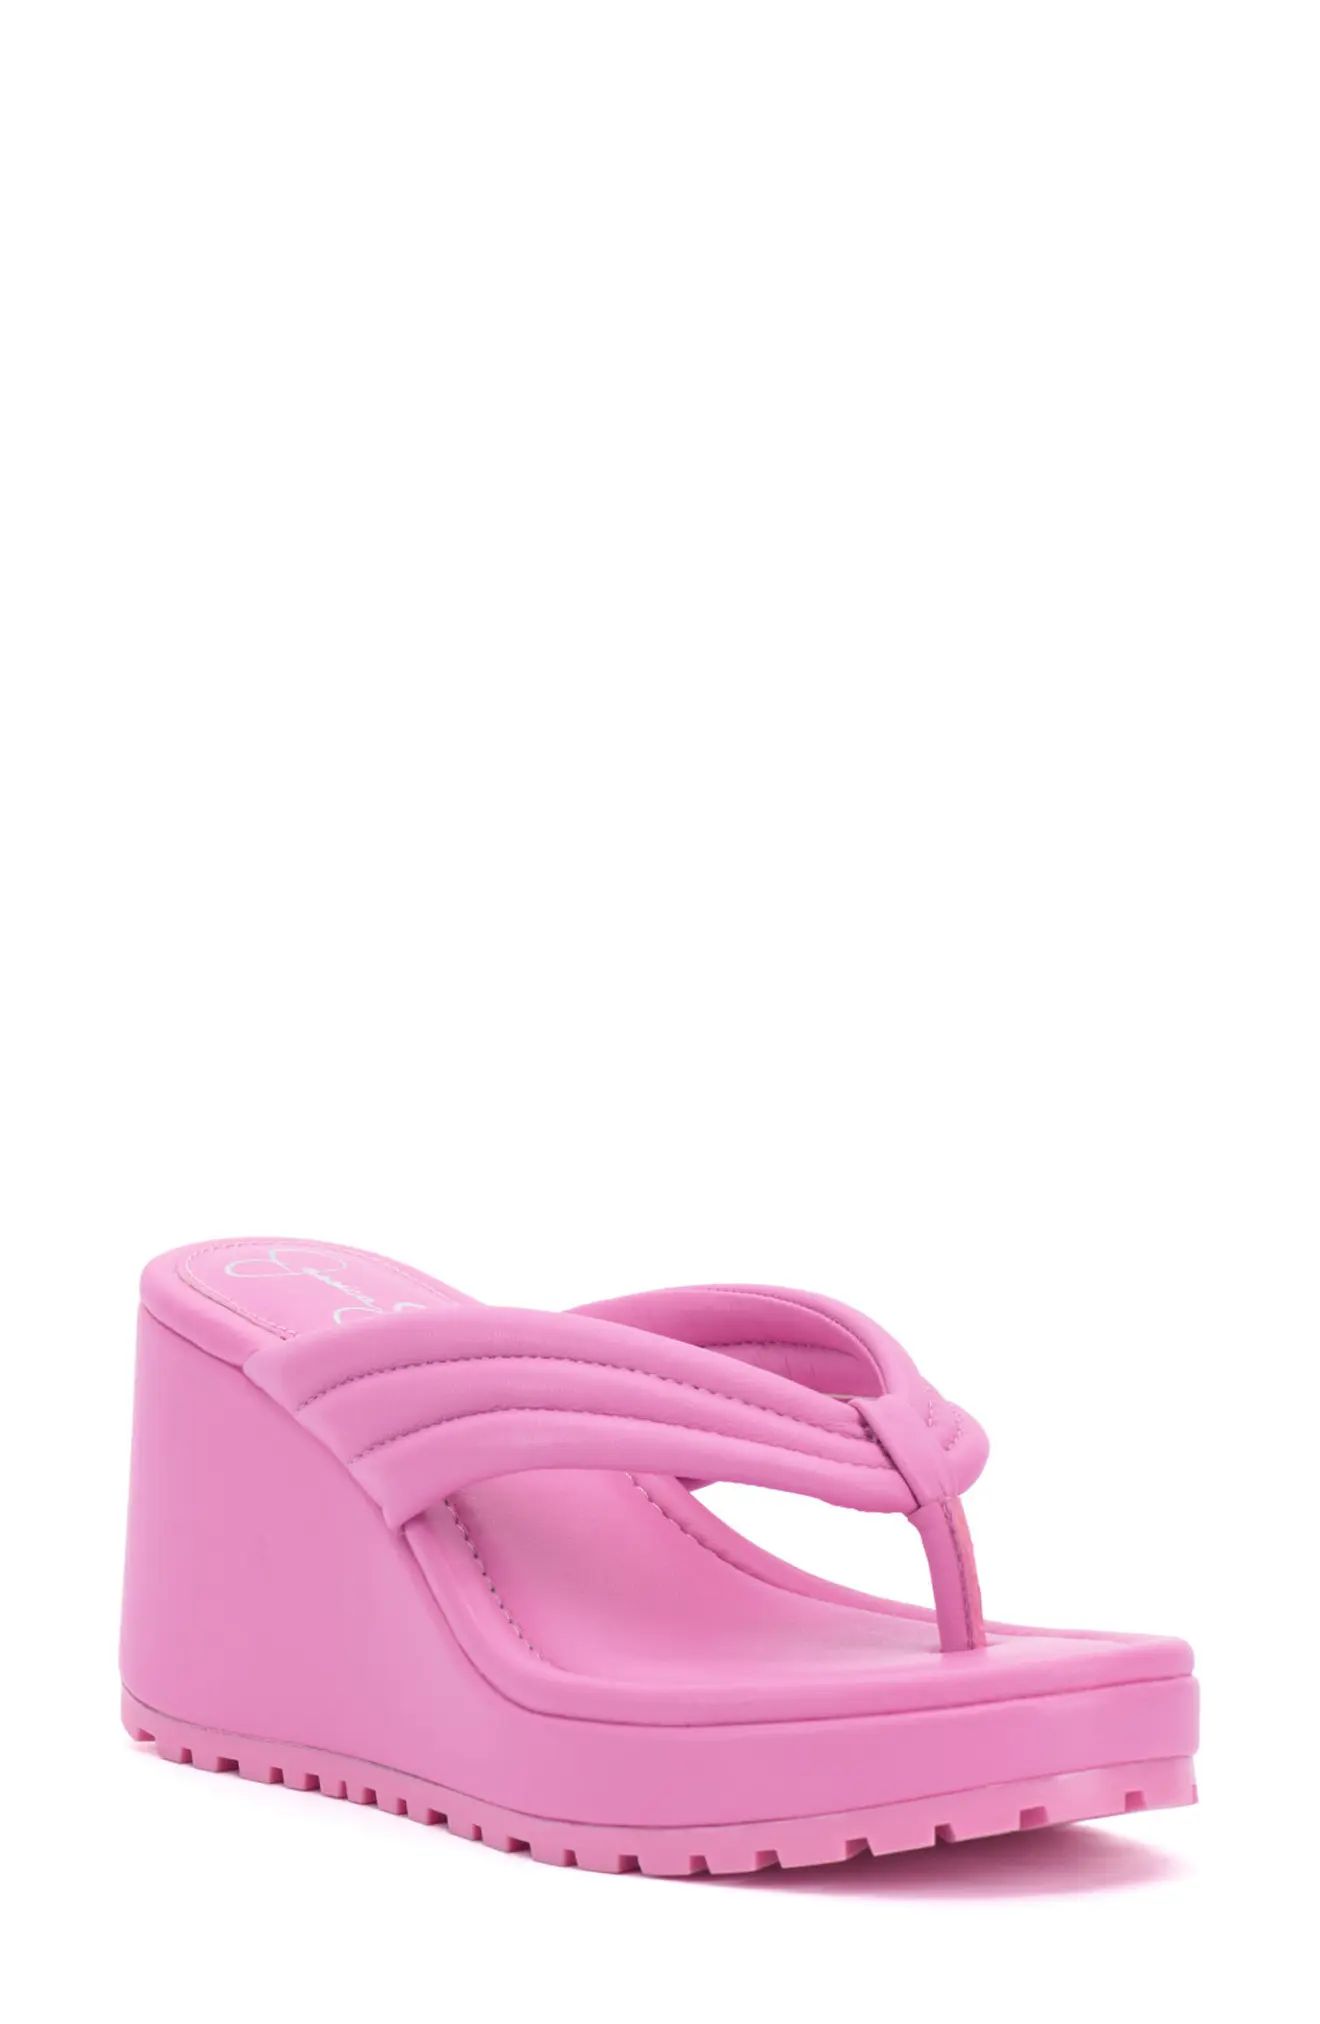 Jessica Simpson Kemnie Platform Wedge Sandal in Bubble Pink at Nordstrom, Size 8.5 | Nordstrom